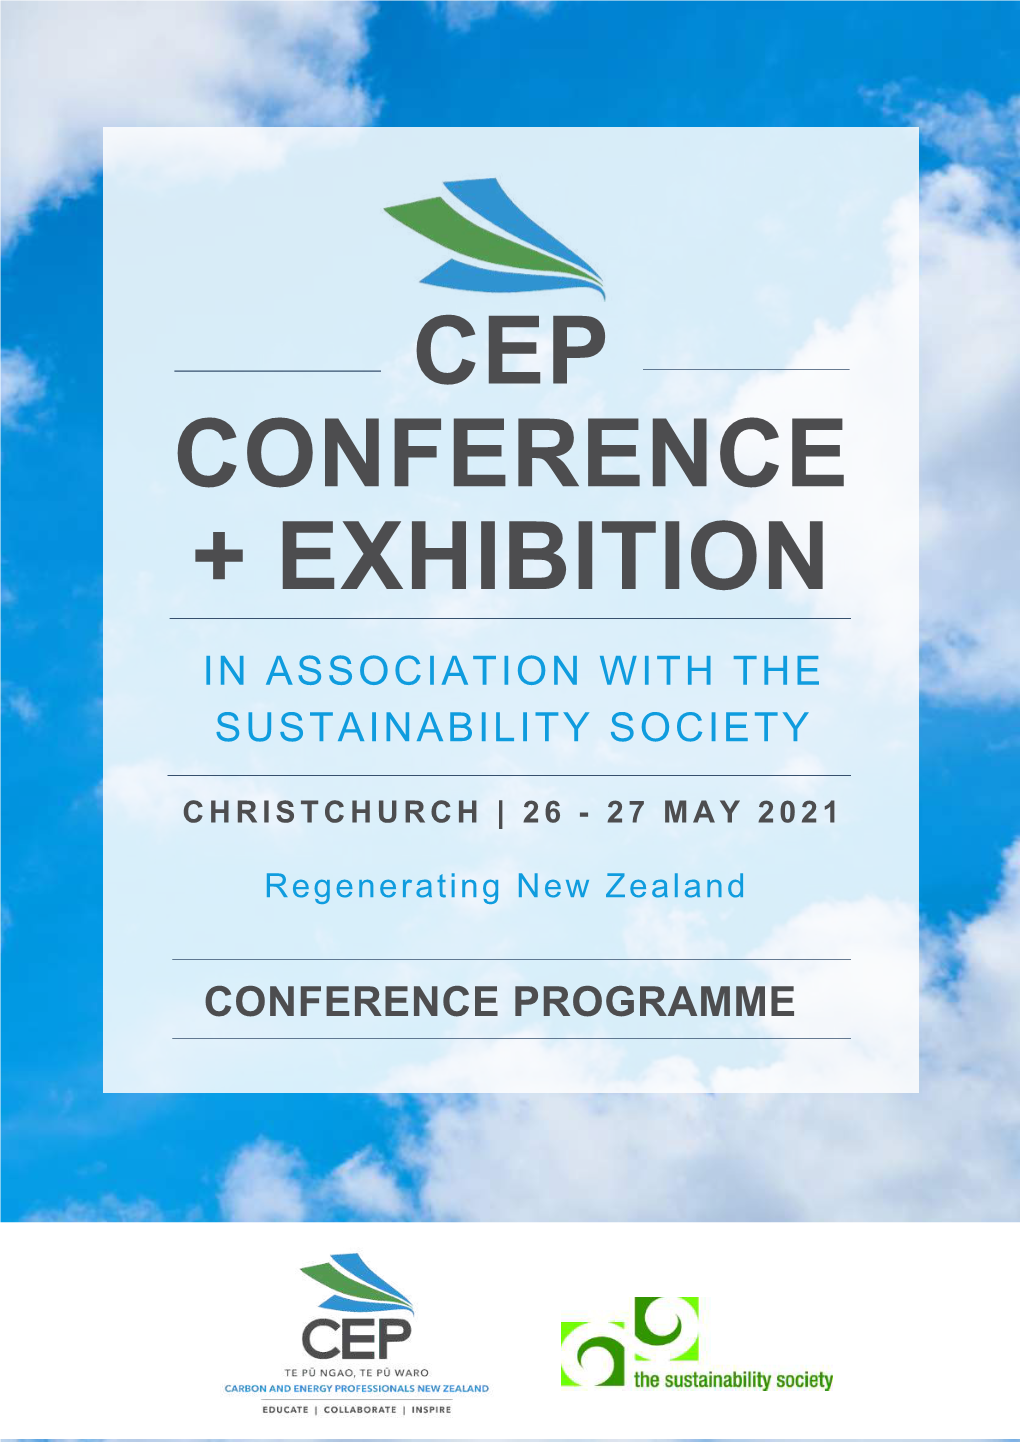 Cep Conference + Exhibition